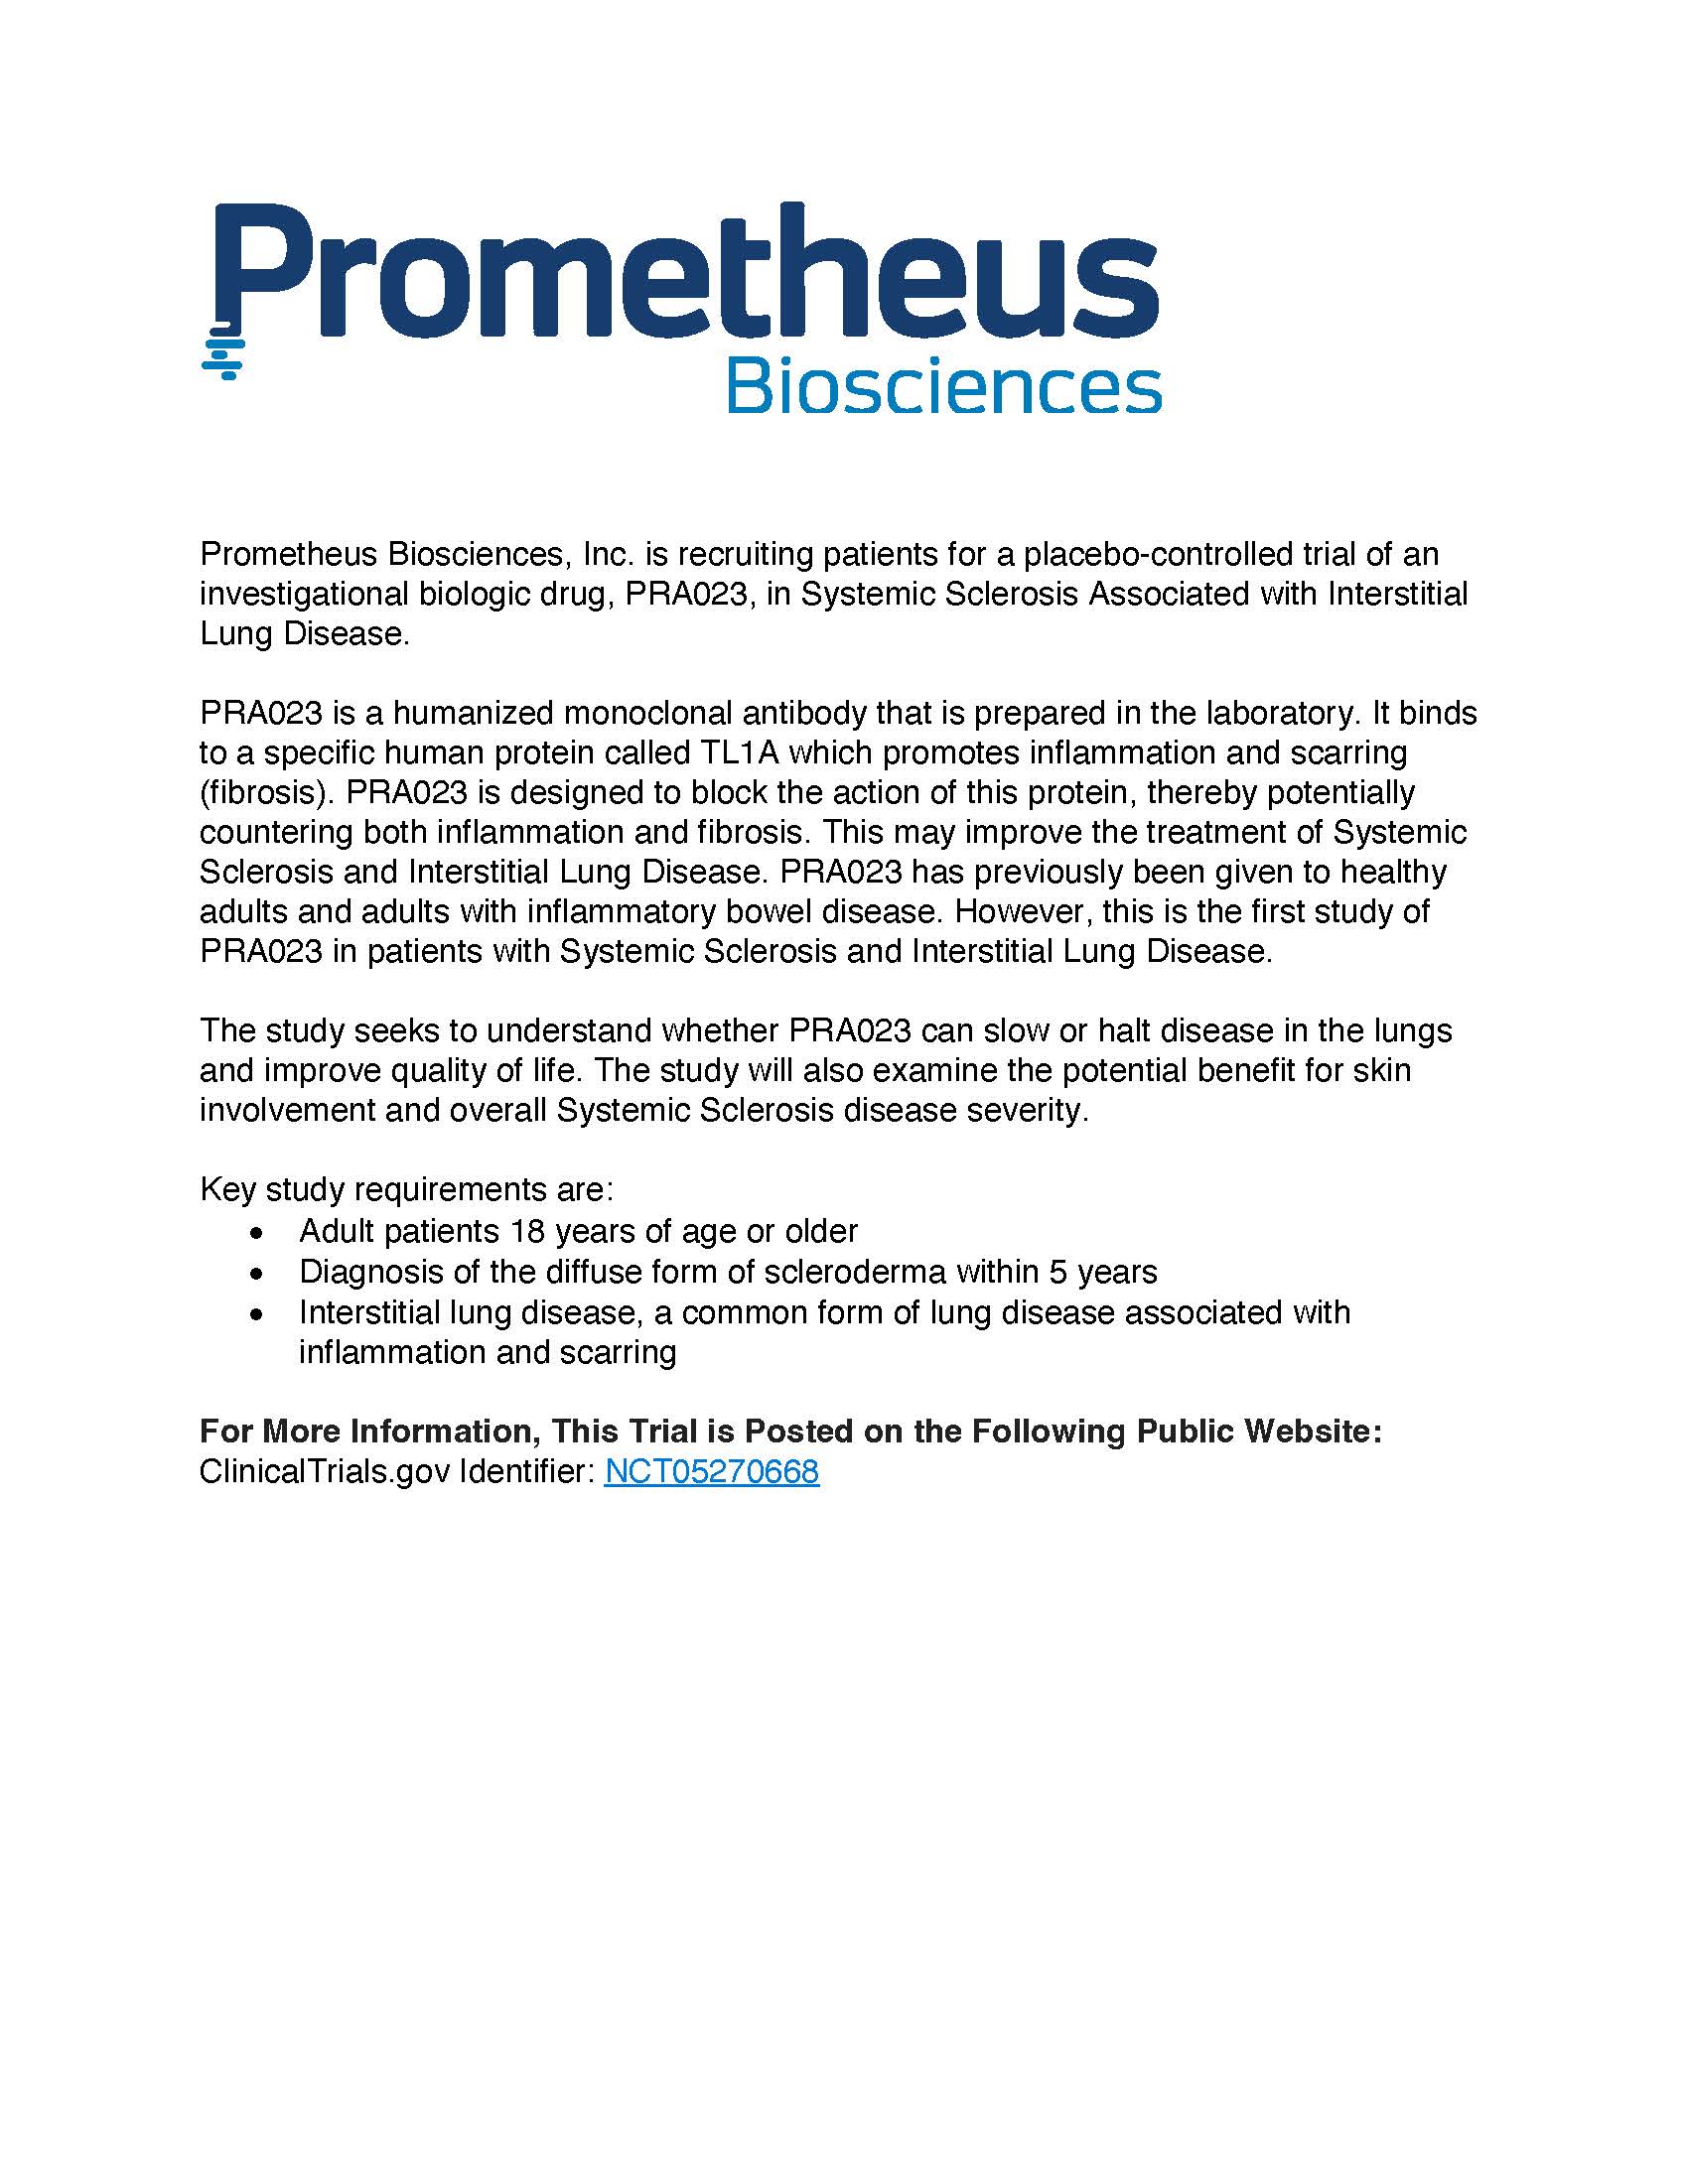 Prometheus Biosciences Study For NSF